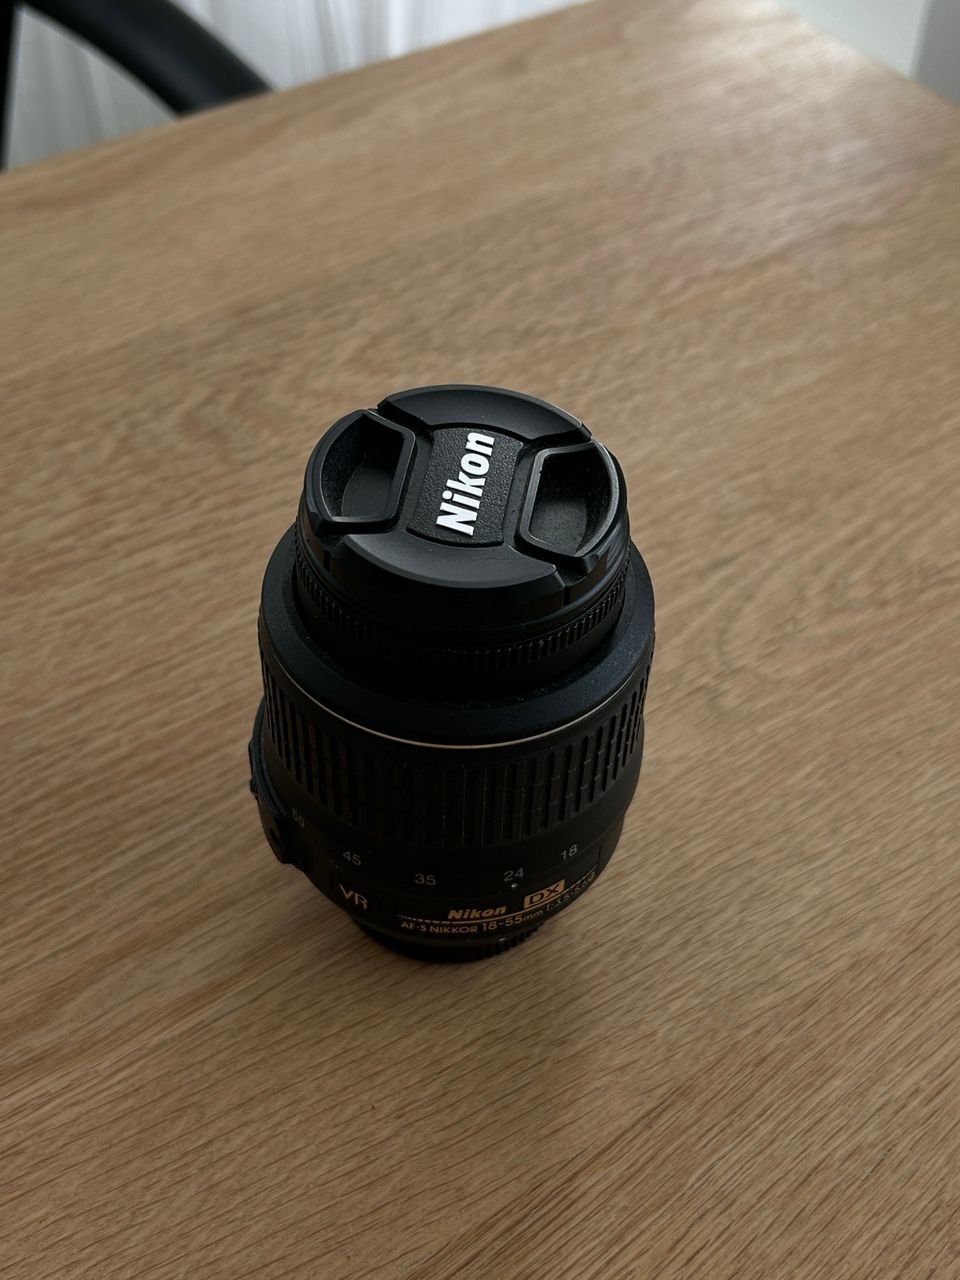 Nikon dx swm vr aspherical 0.28m 0.92ft 18-55mm